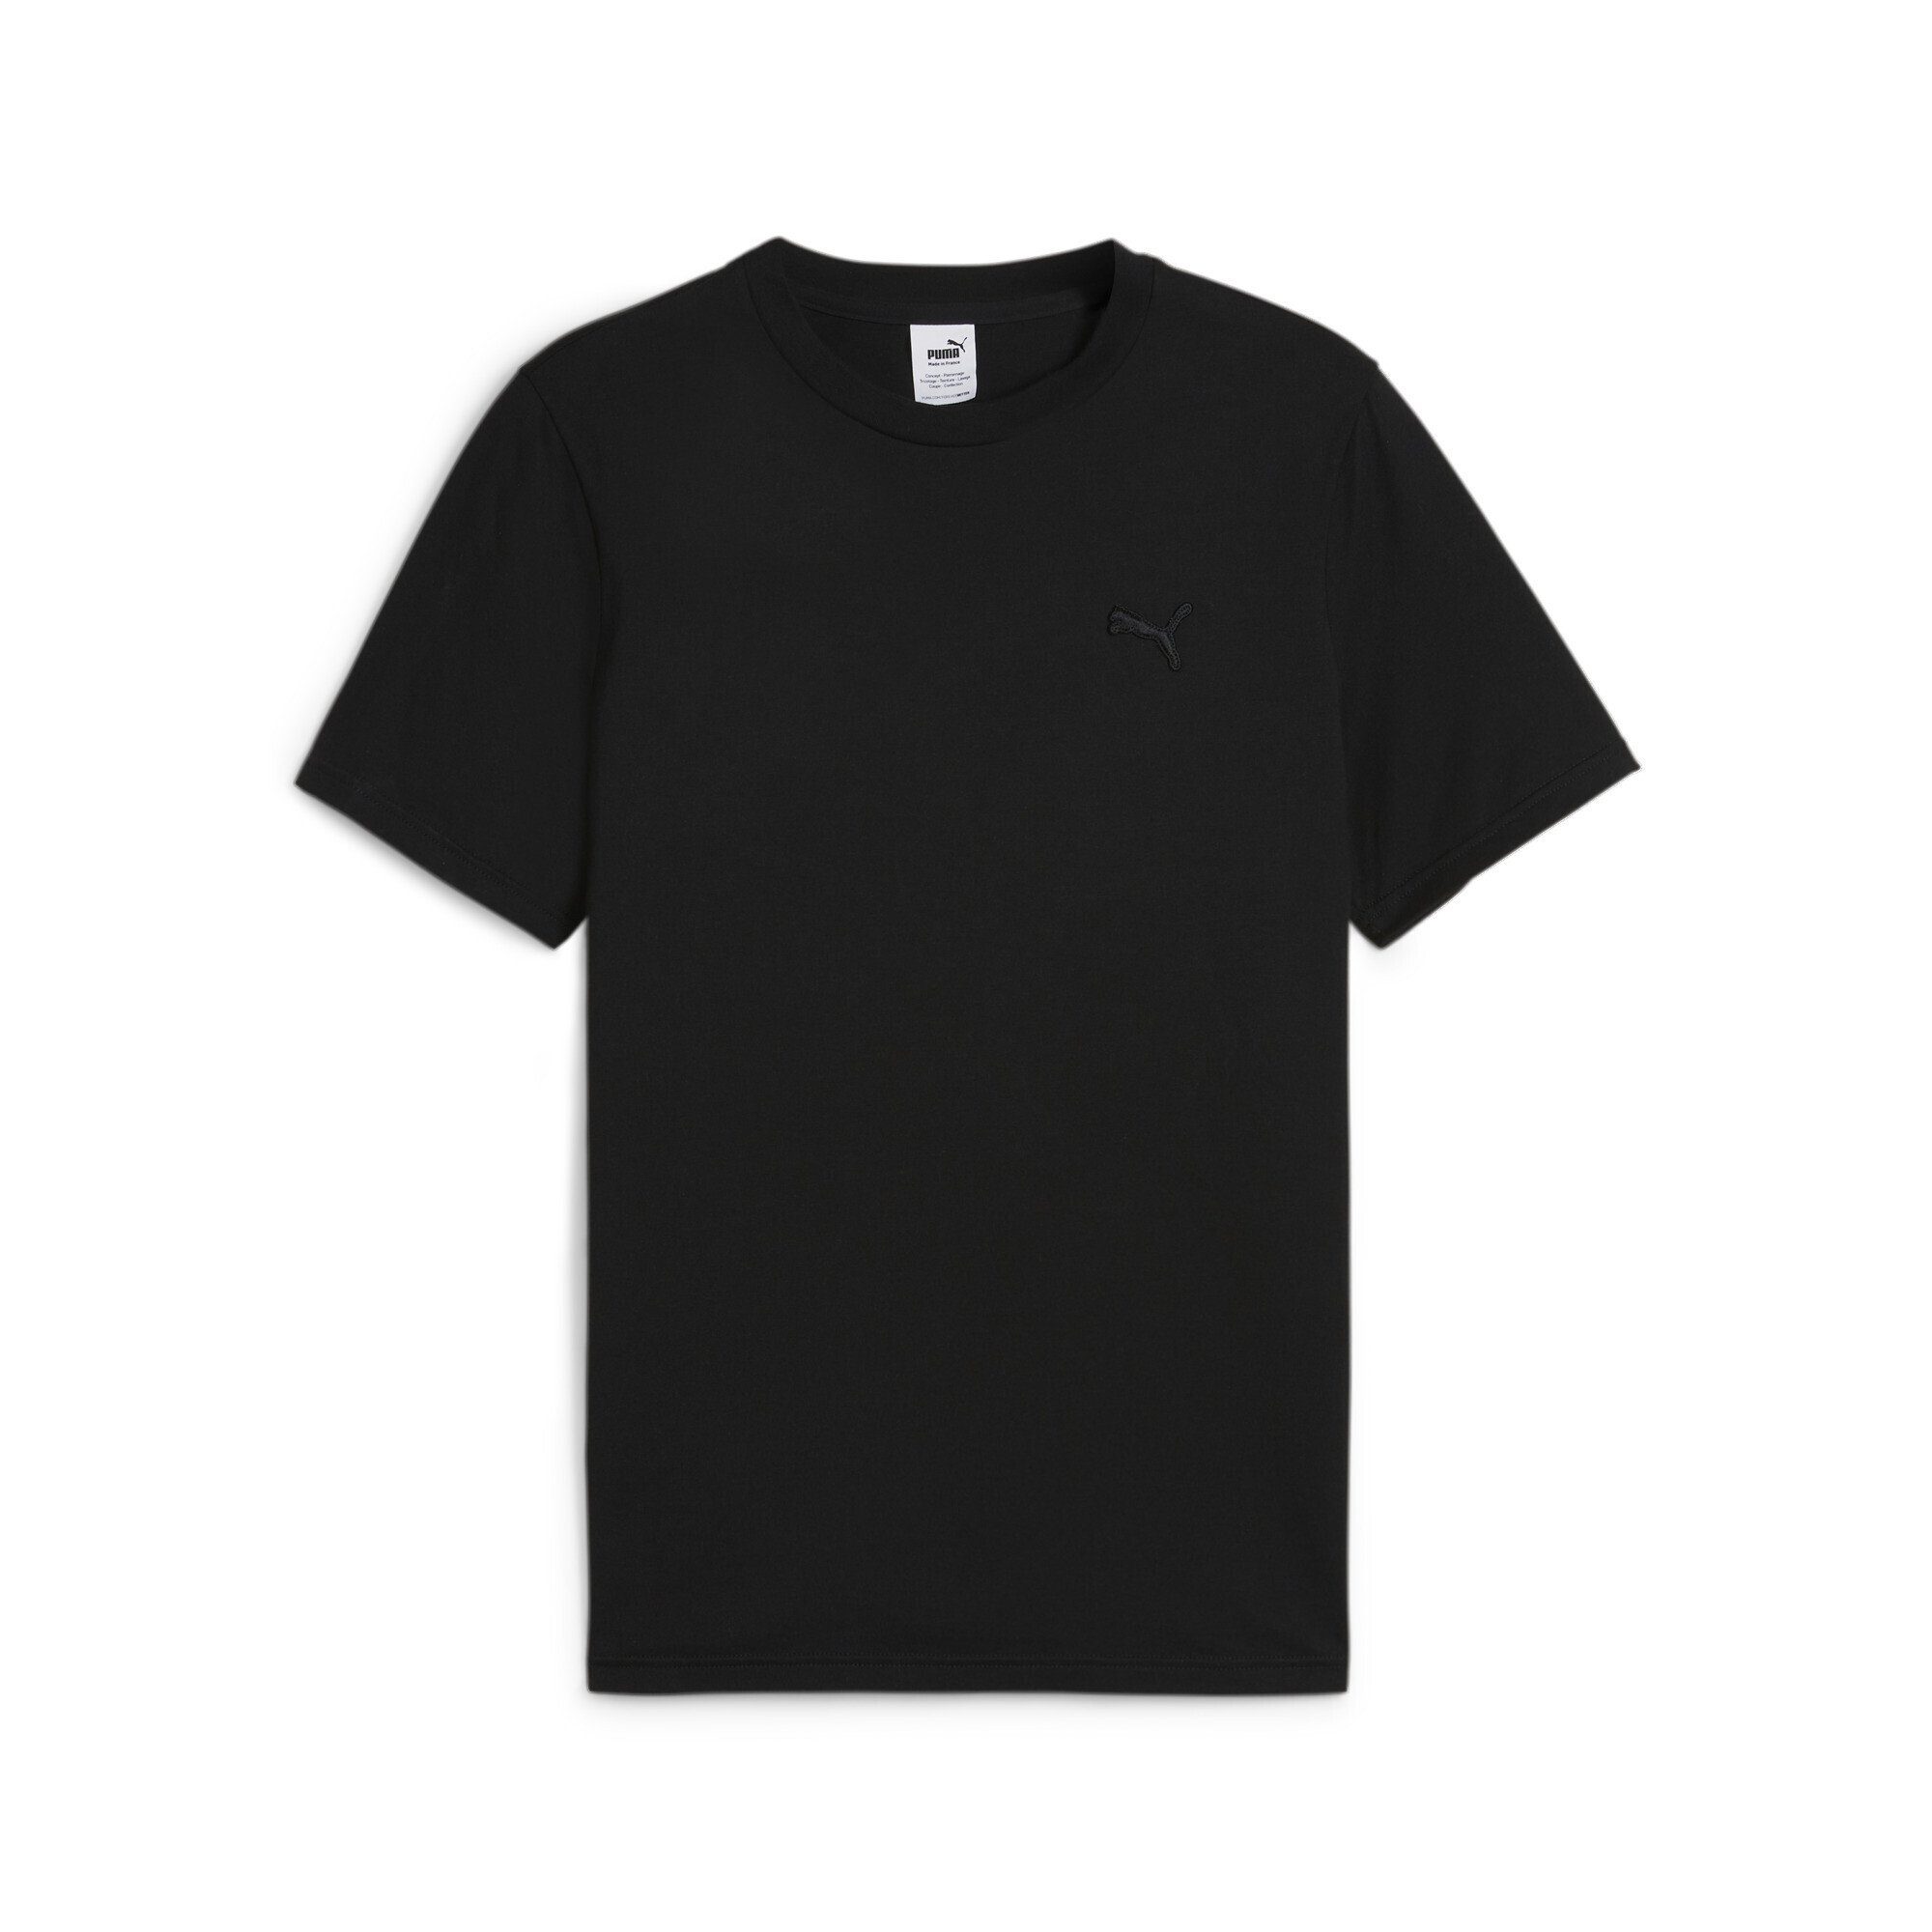 T-Shirt France In Black Made Herren PUMA T-Shirt